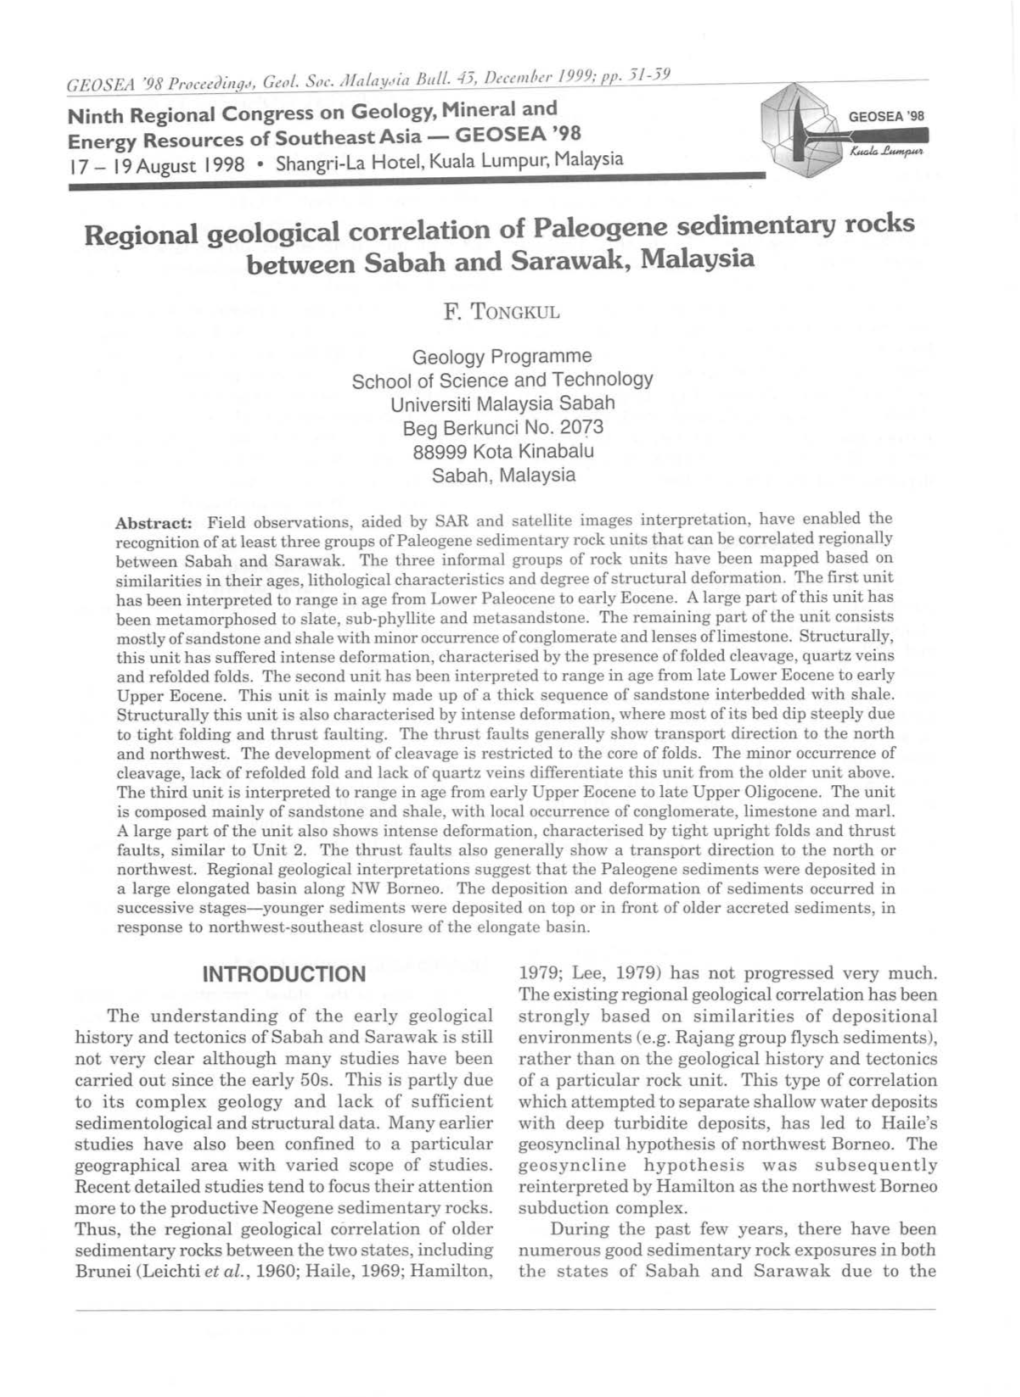 Regional Geological Correlation of Paleogene Sedimentary Rocks Between Sabah and Sarawak, Malaysia